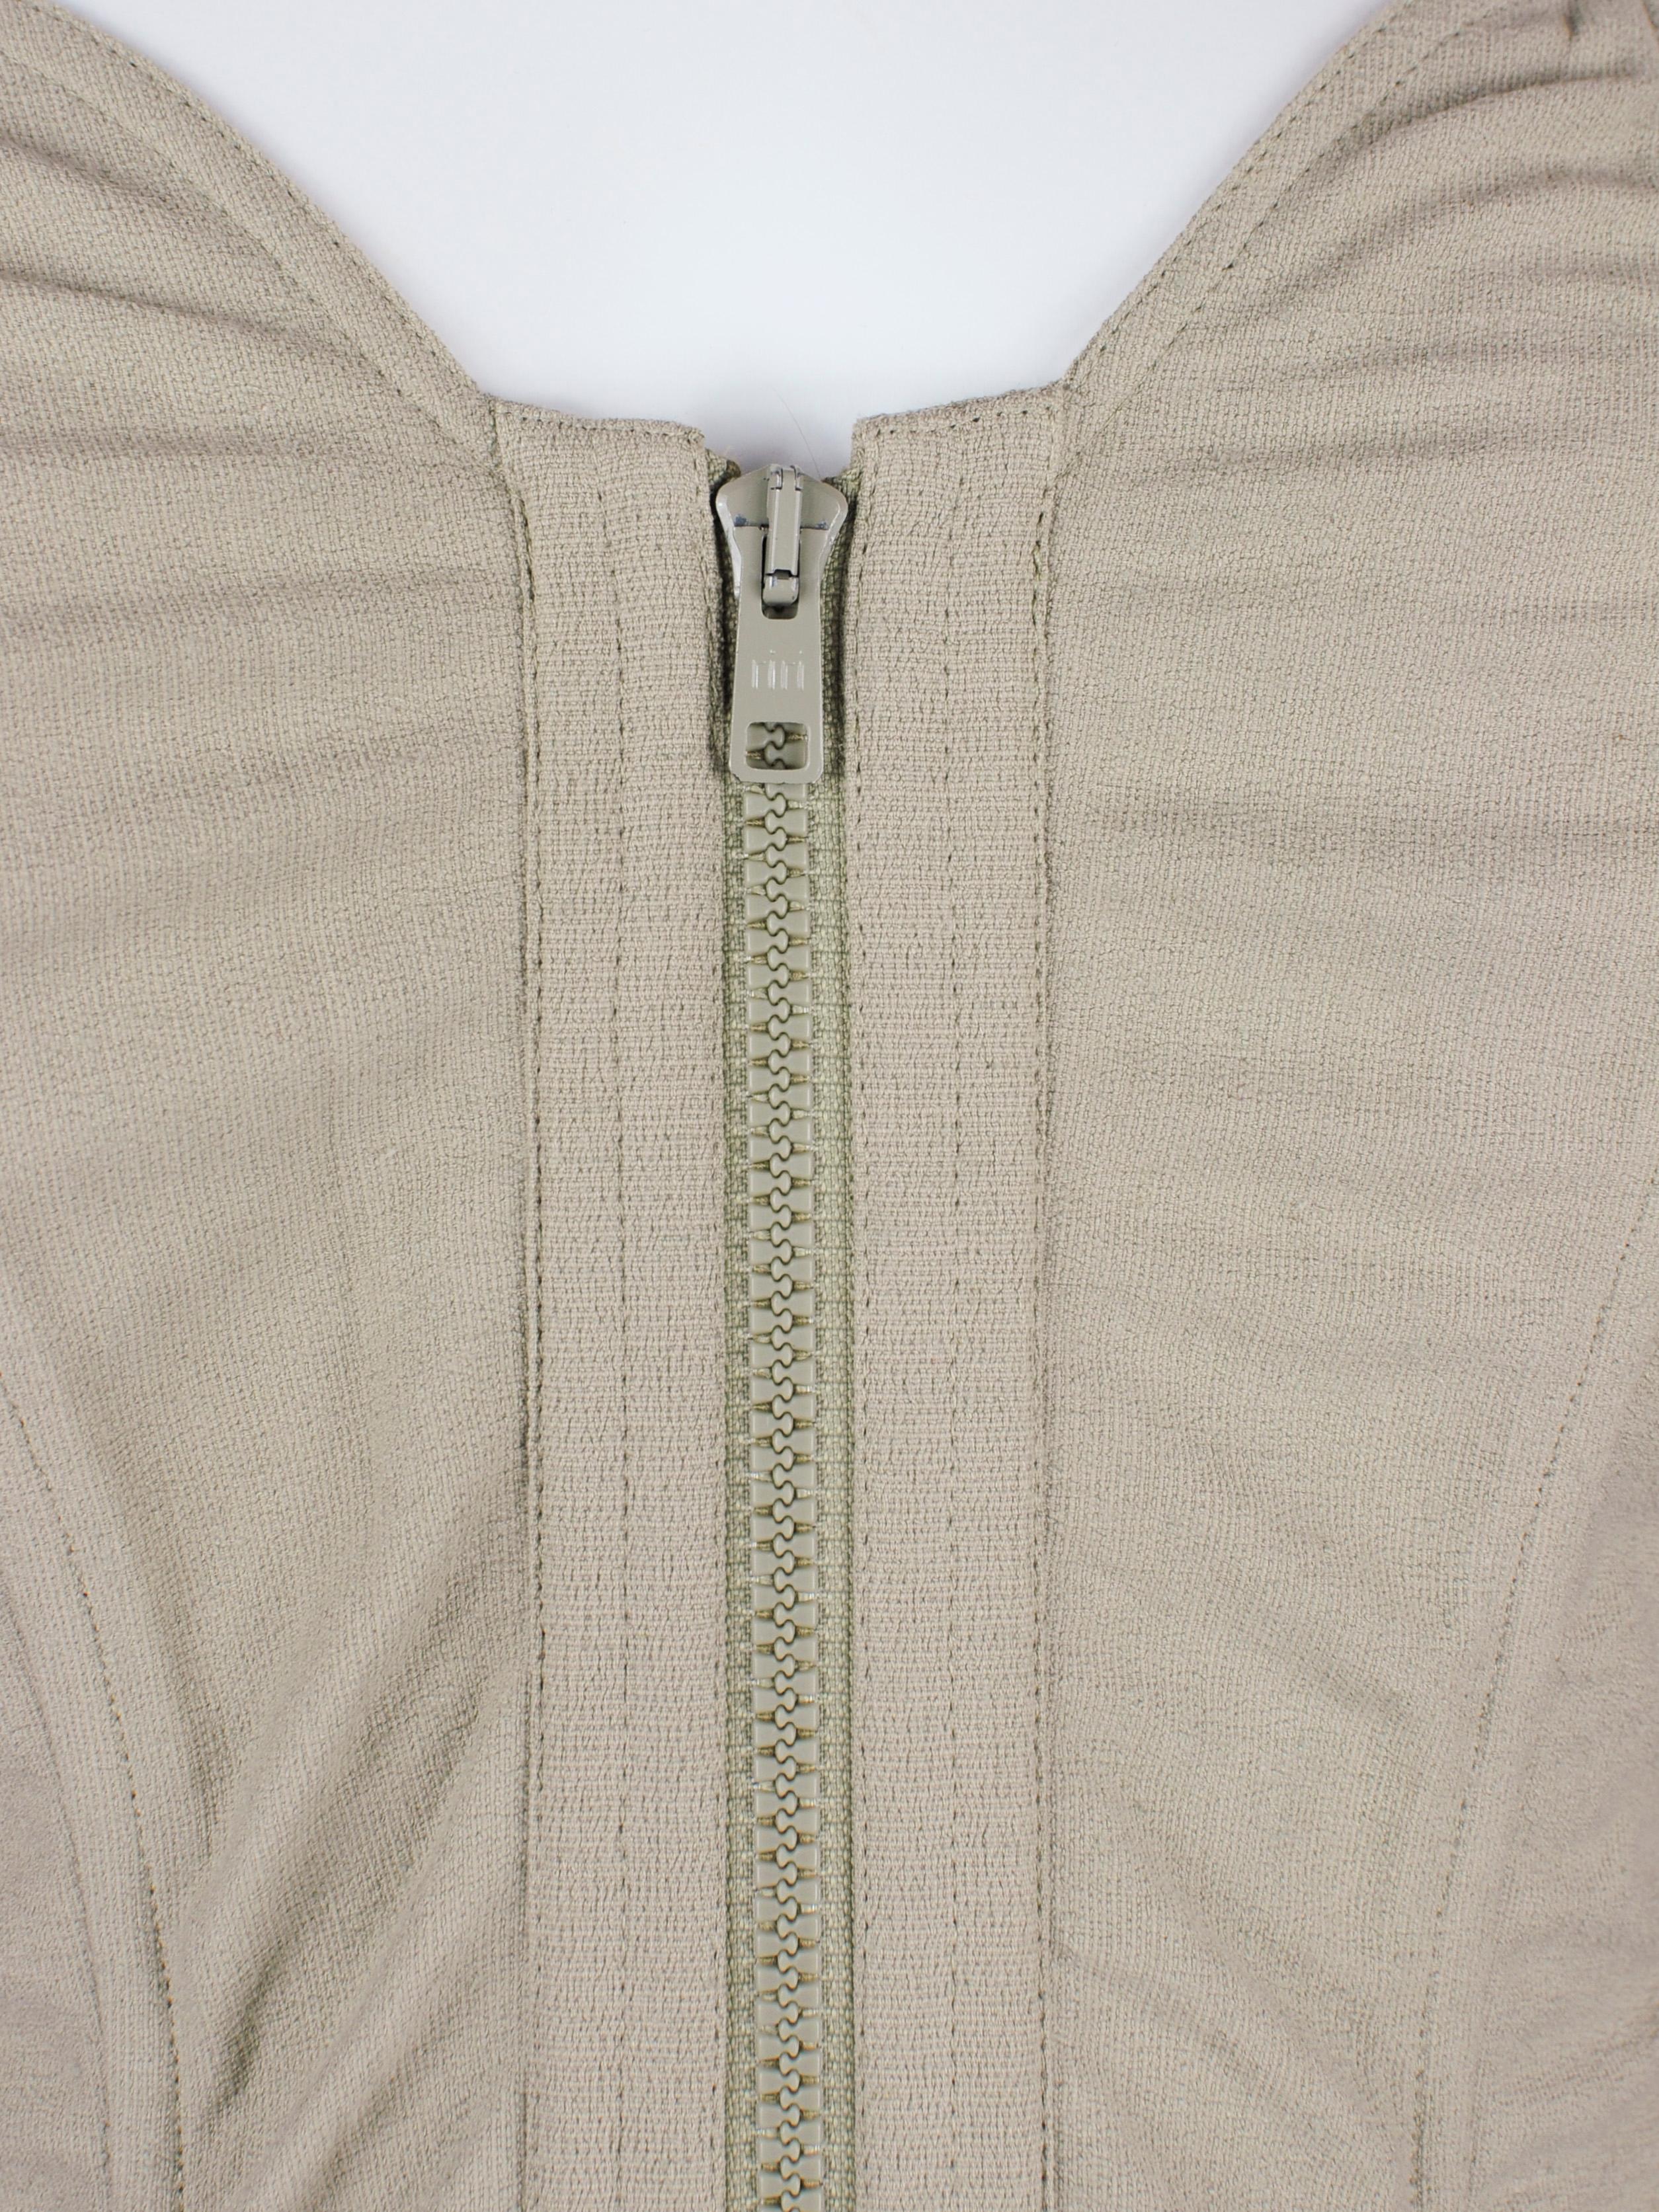 La Perla Corset NWT Deadstock Beige Linen Blend Zipper Peplum Shape 1990s In New Condition For Sale In AMSTERDAM, NL